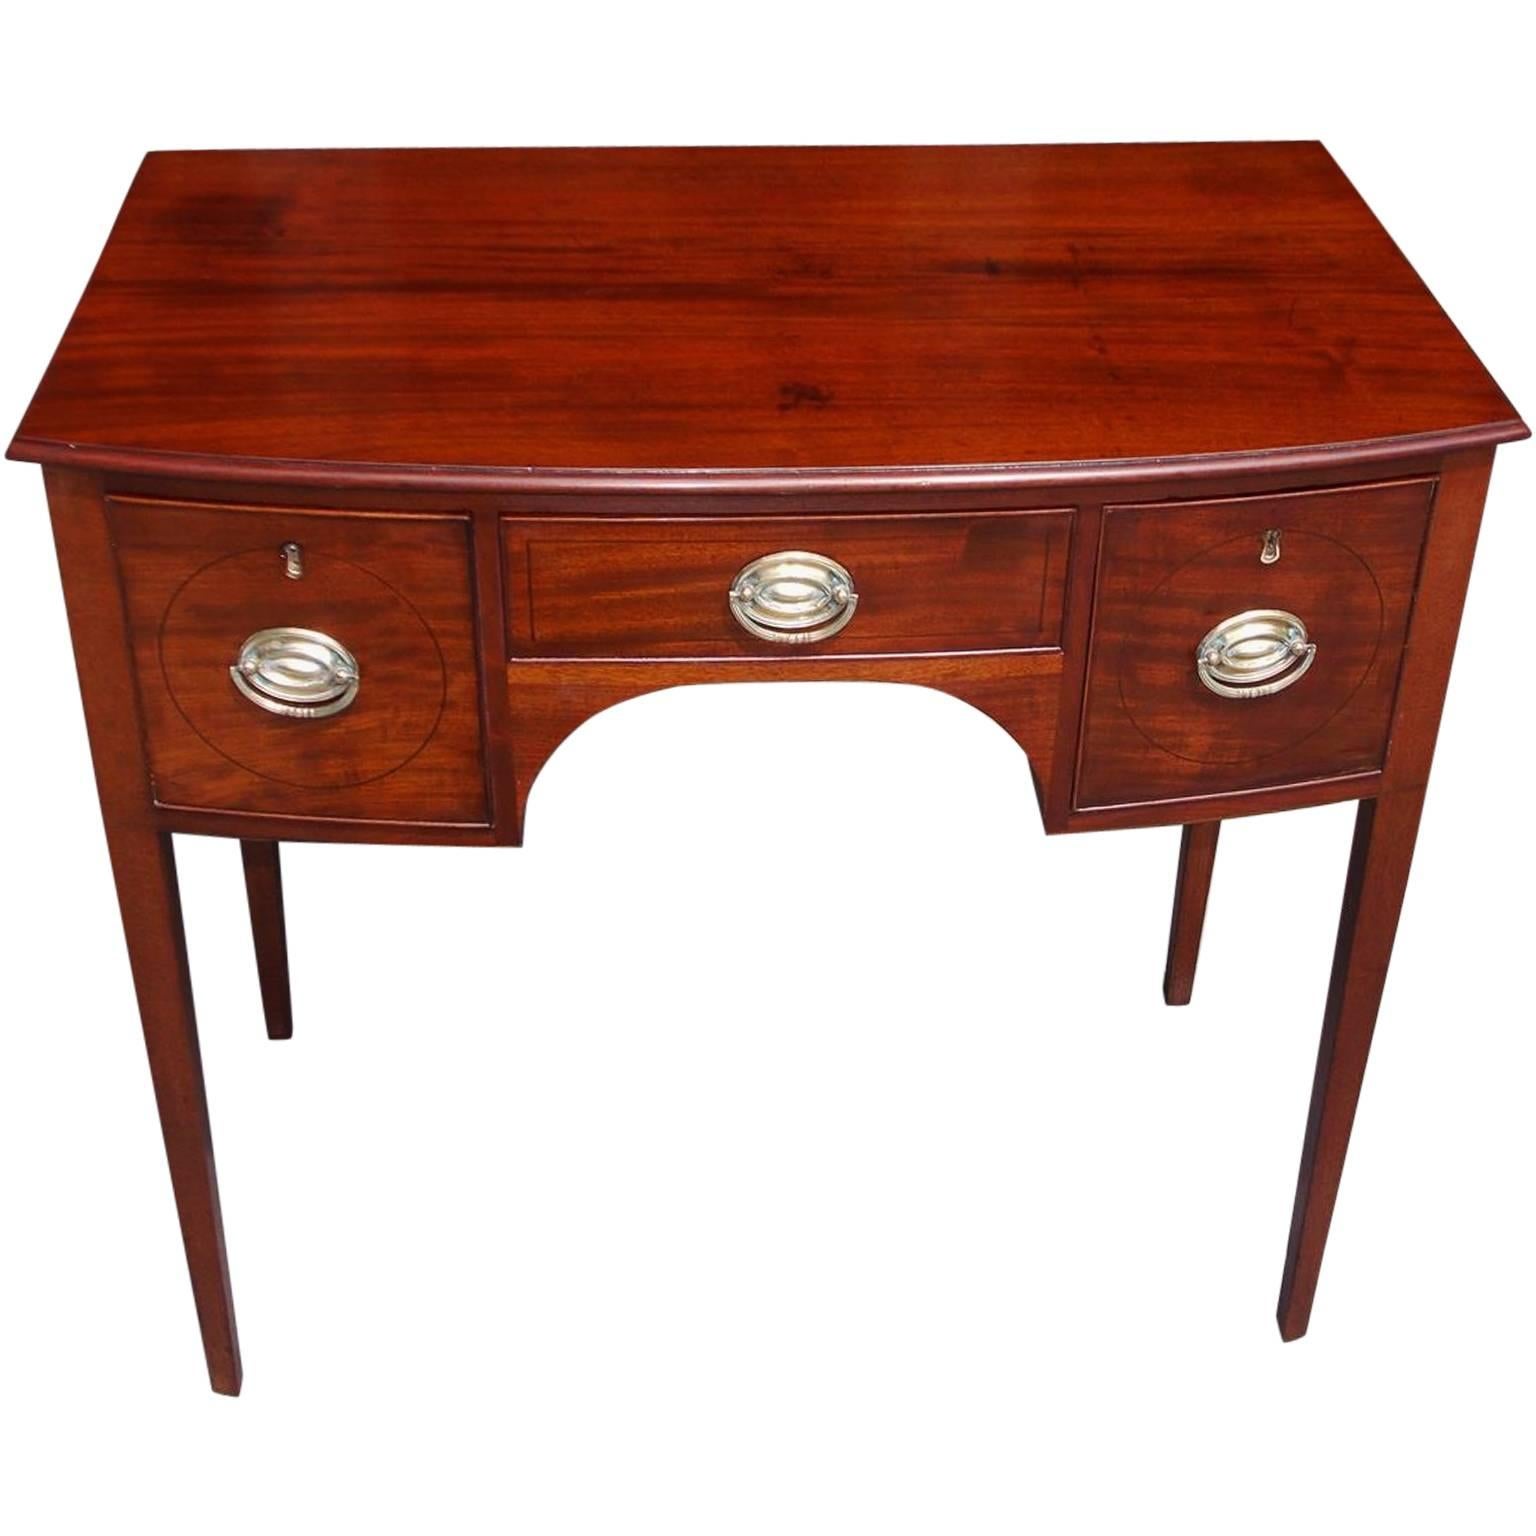 English Mahogany Bow Front Knee Hole Lowboy / Dressing Table, Circa 1800